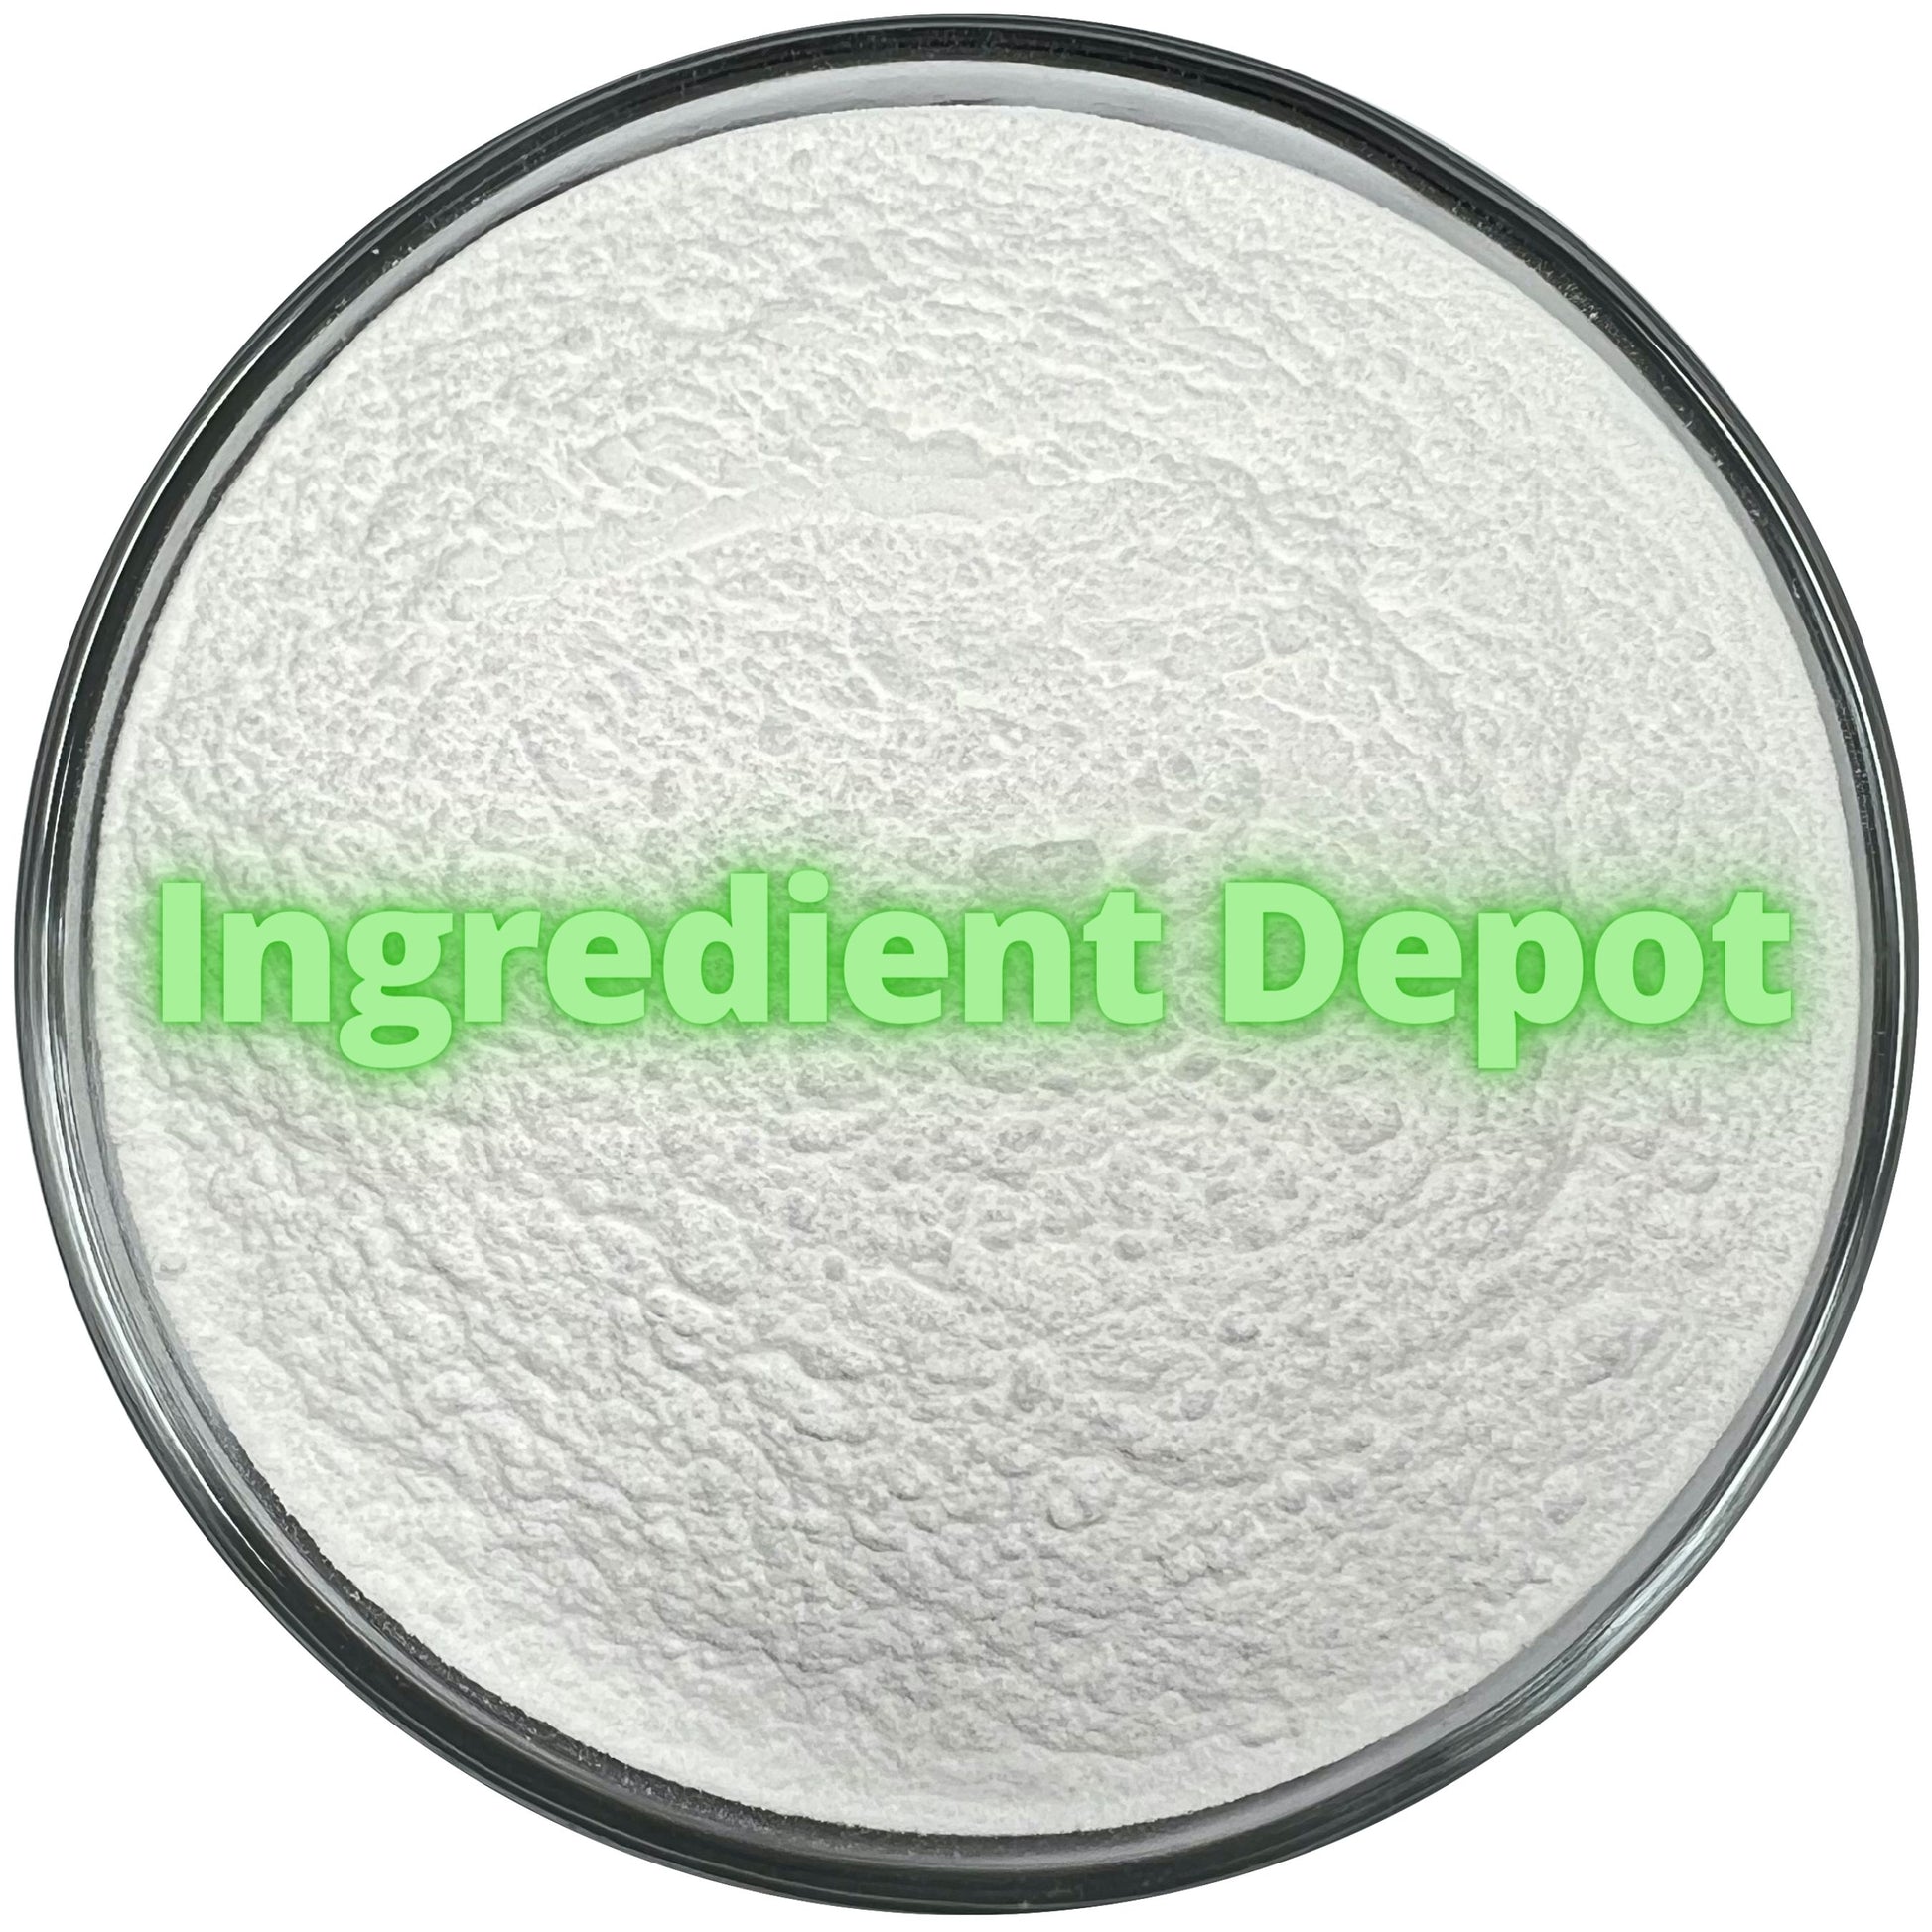 MCC 101 Microcrystalline Cellulose 1 kg - IngredientDepot.com